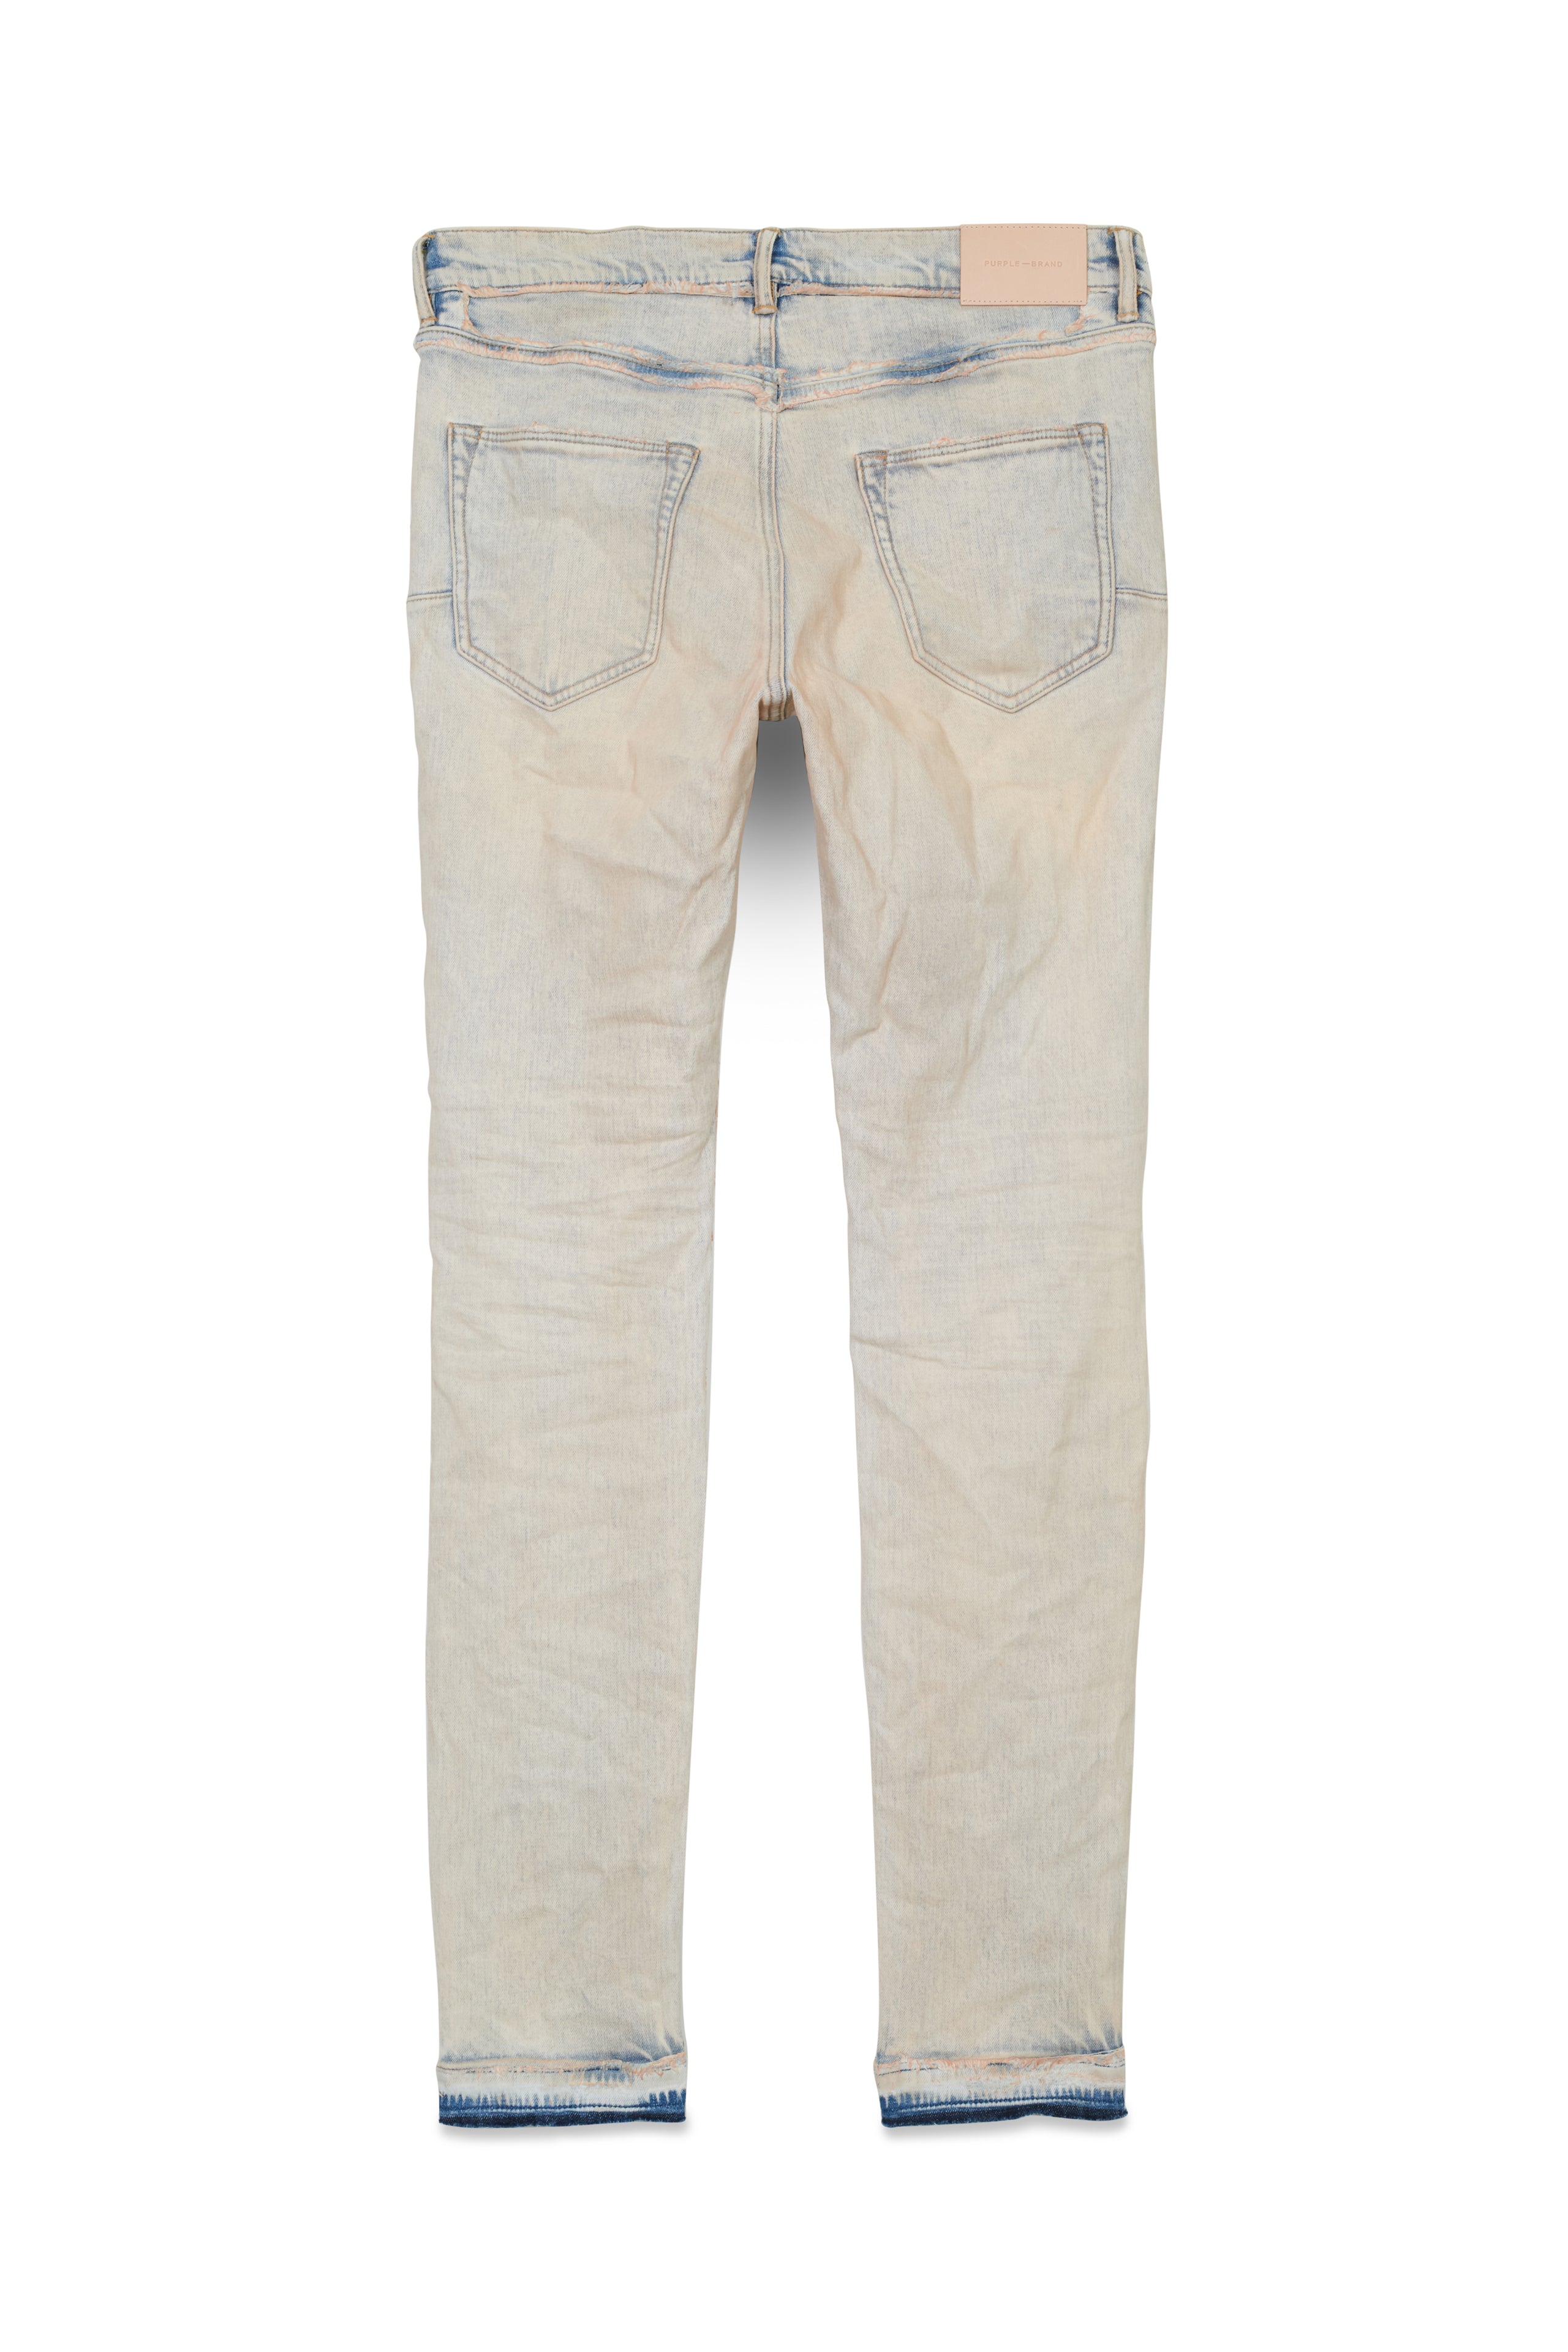 NWT Grey Purple Brand Iridescent Painter Grey Jeans Size 33 $320